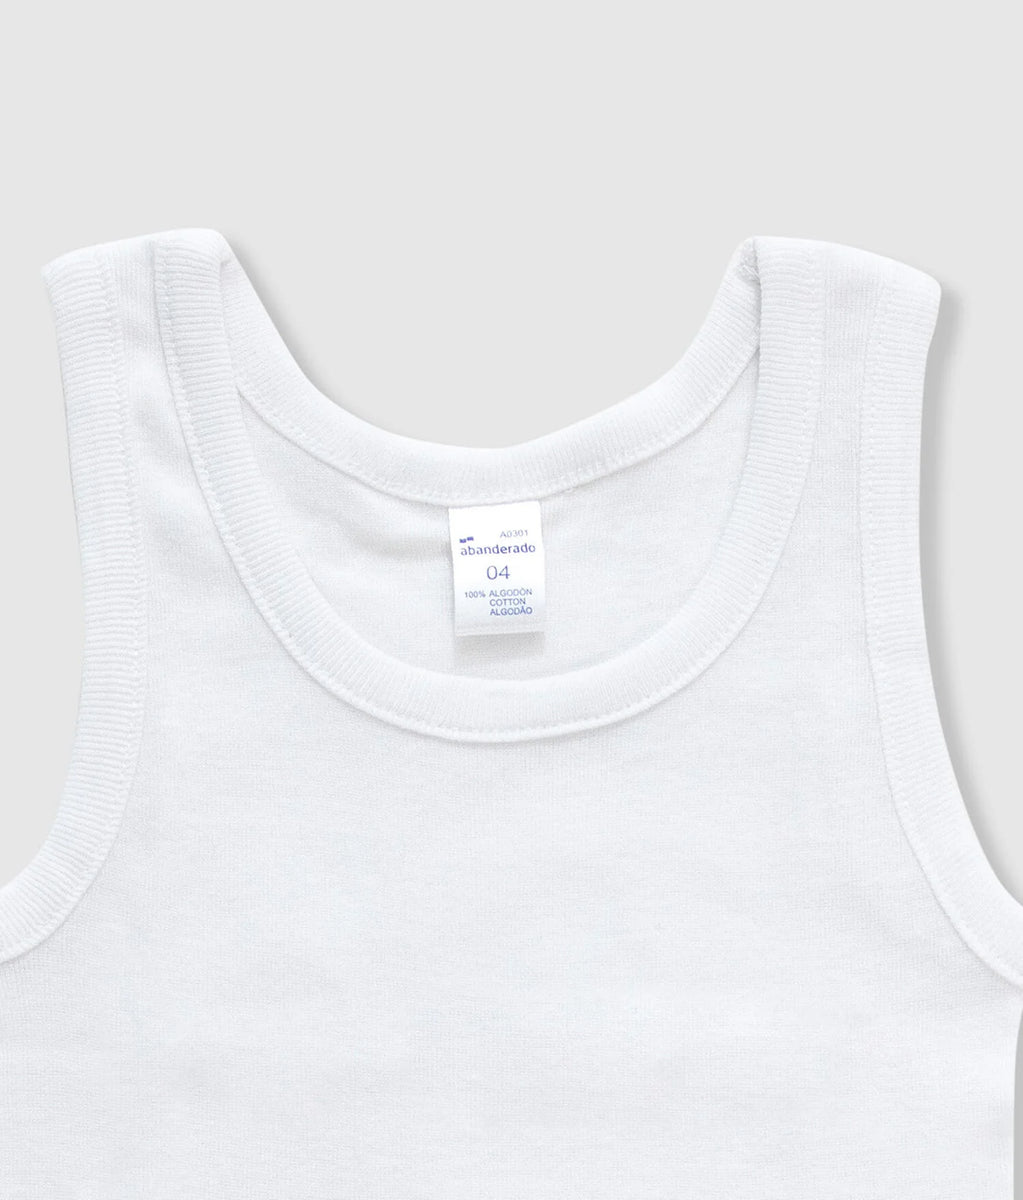 Camiseta interior de tirantes niño algodón 100%